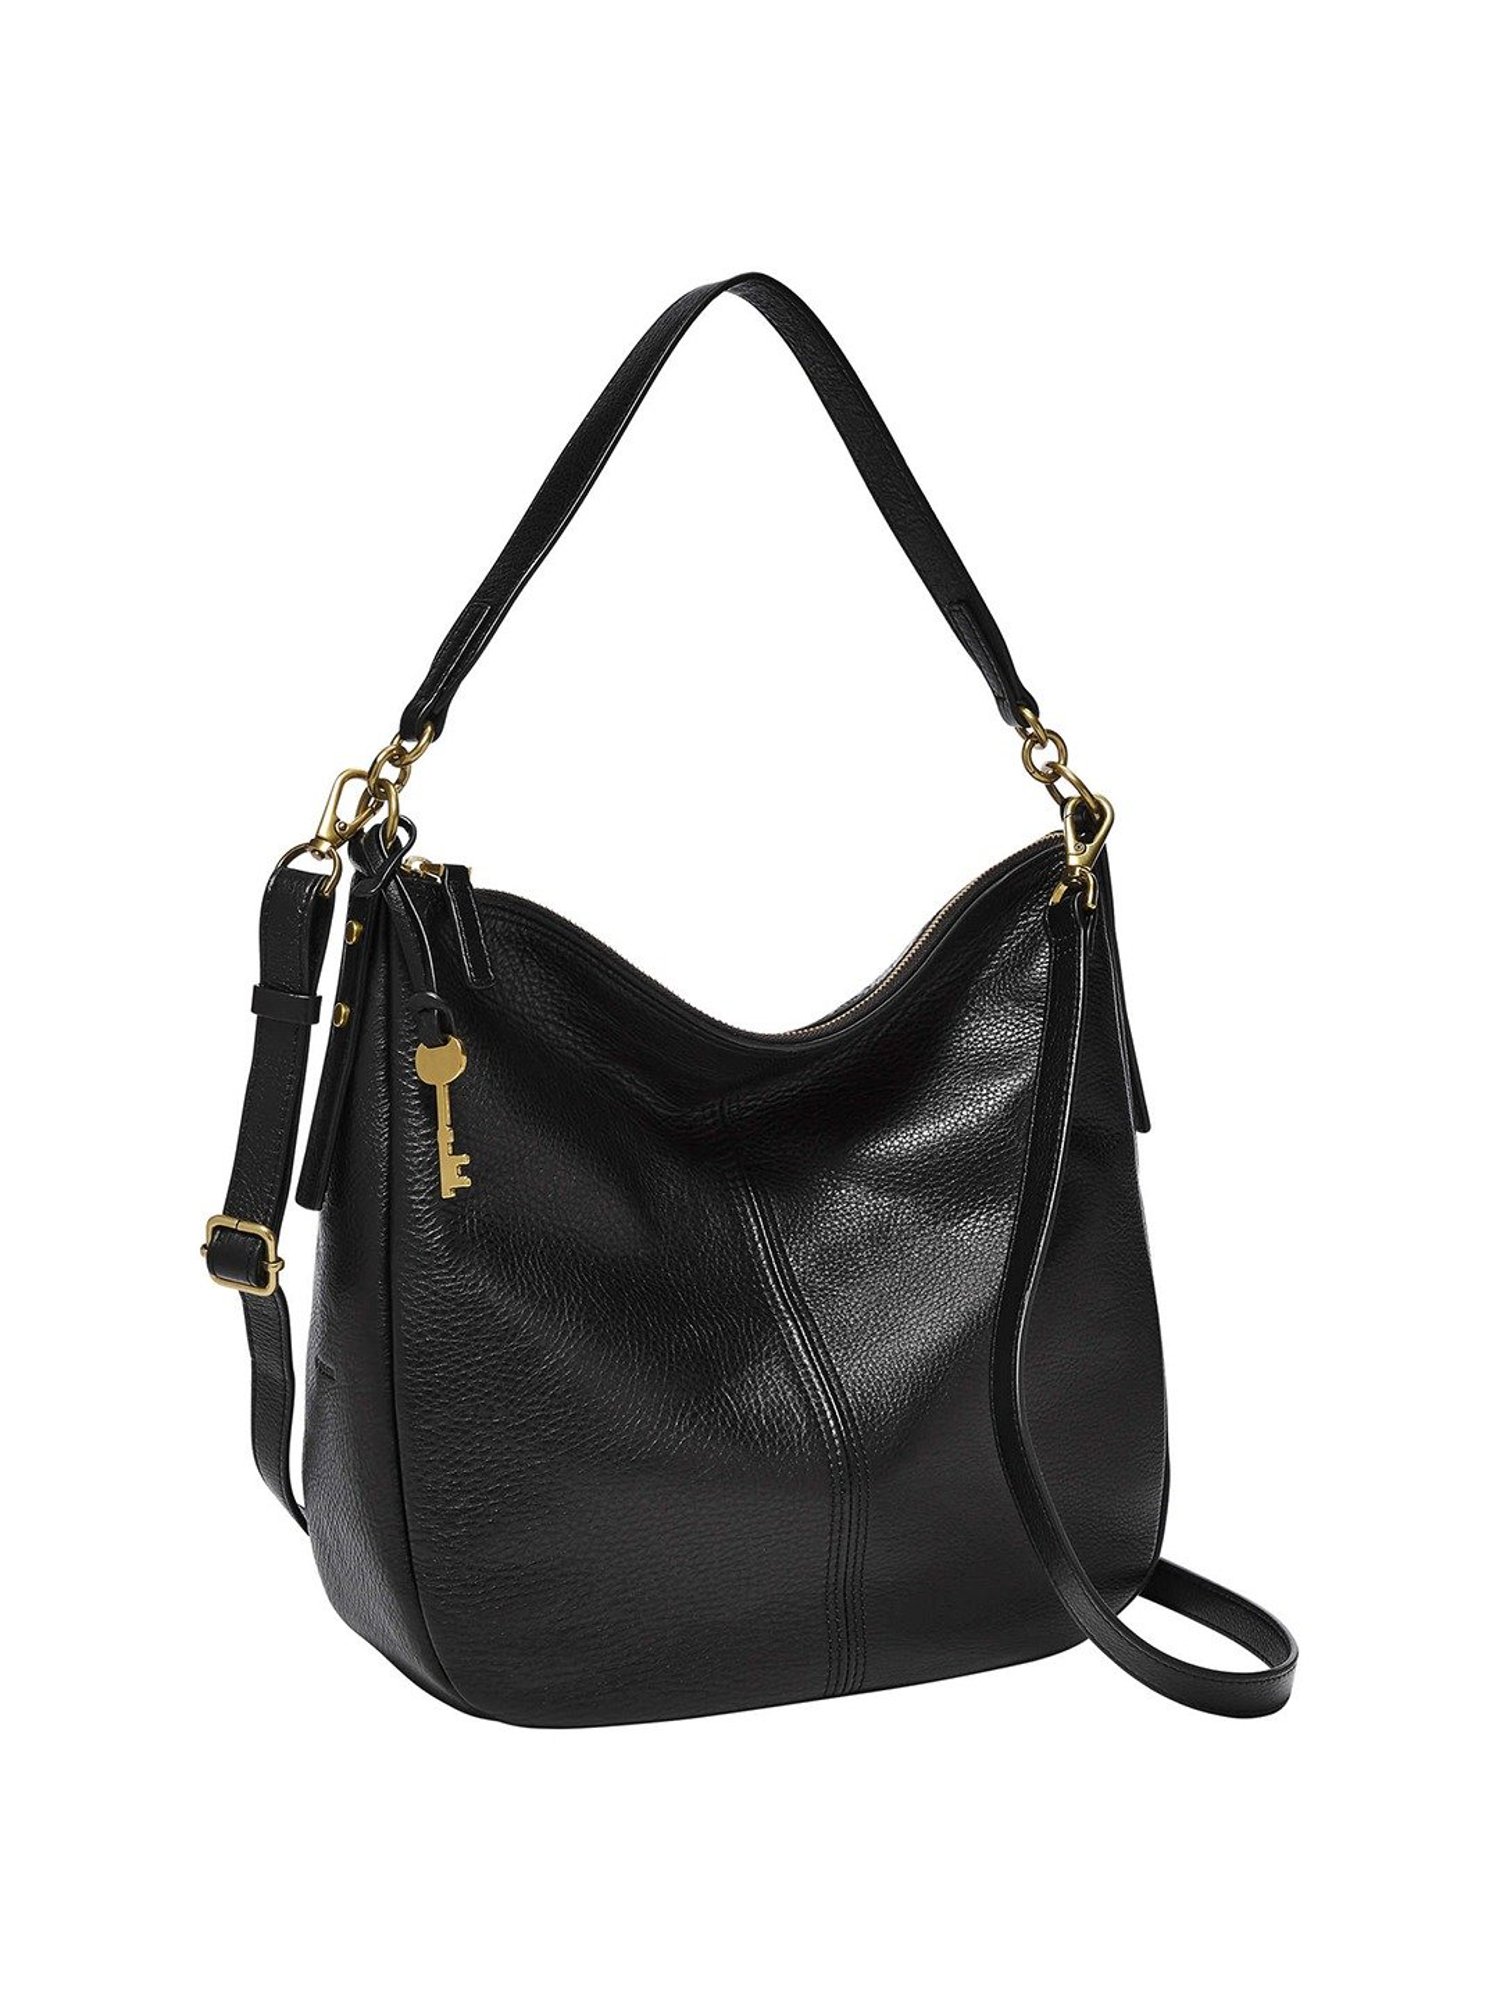 FOSSIL Talita Leather Hobo Shoulder Bag | Leather hobo, Hobo, Bags